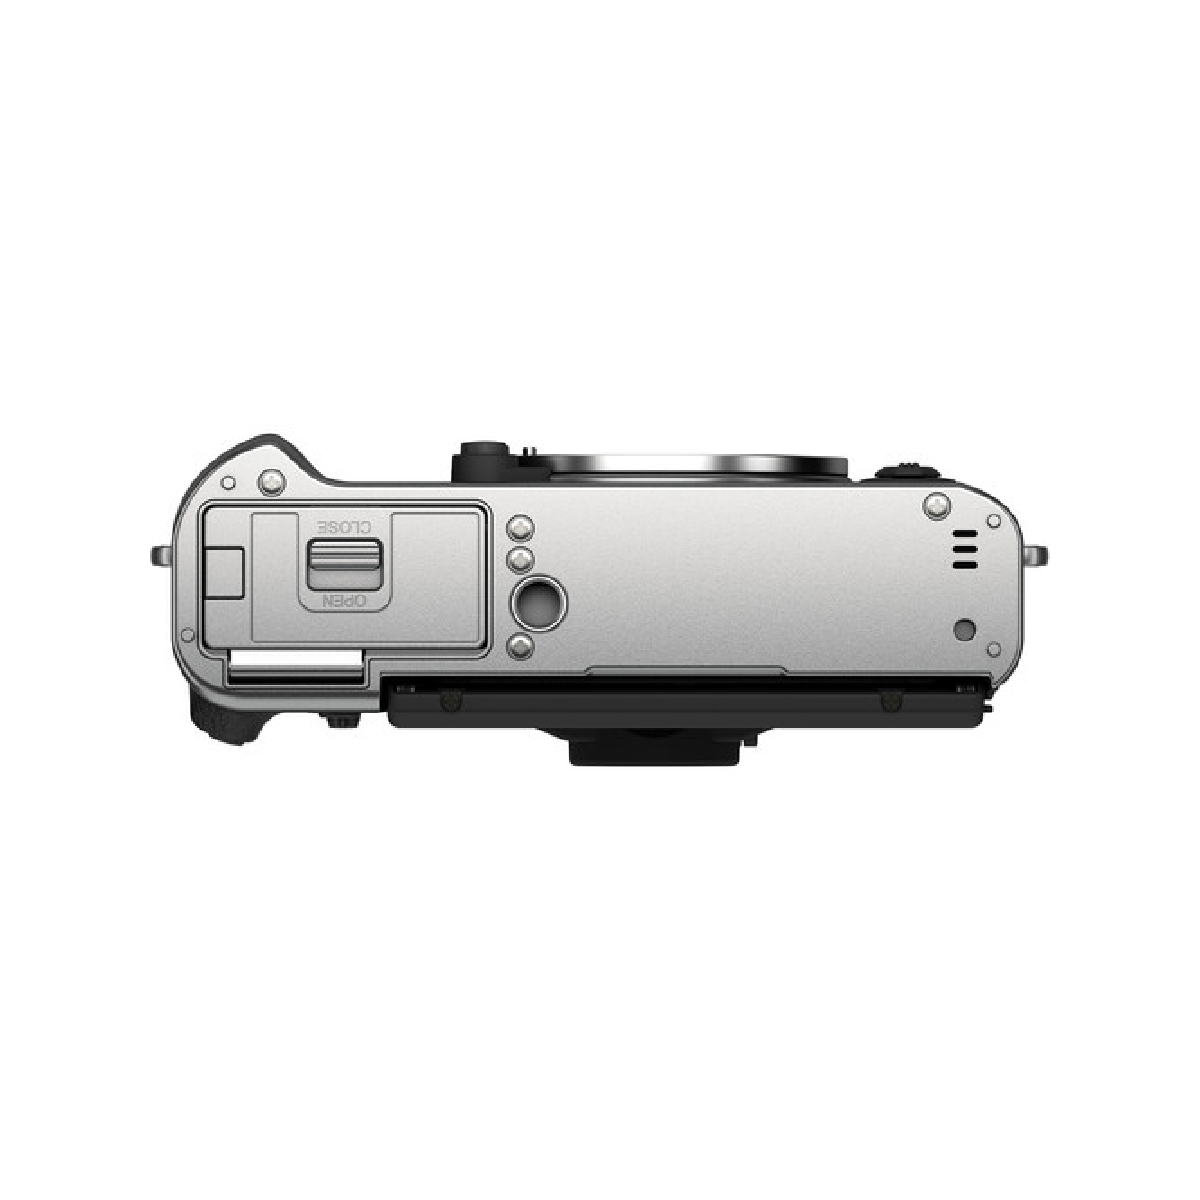 Fujifilm X-T30 II Camera Body With XF18-55mm Lens – Silver (5)